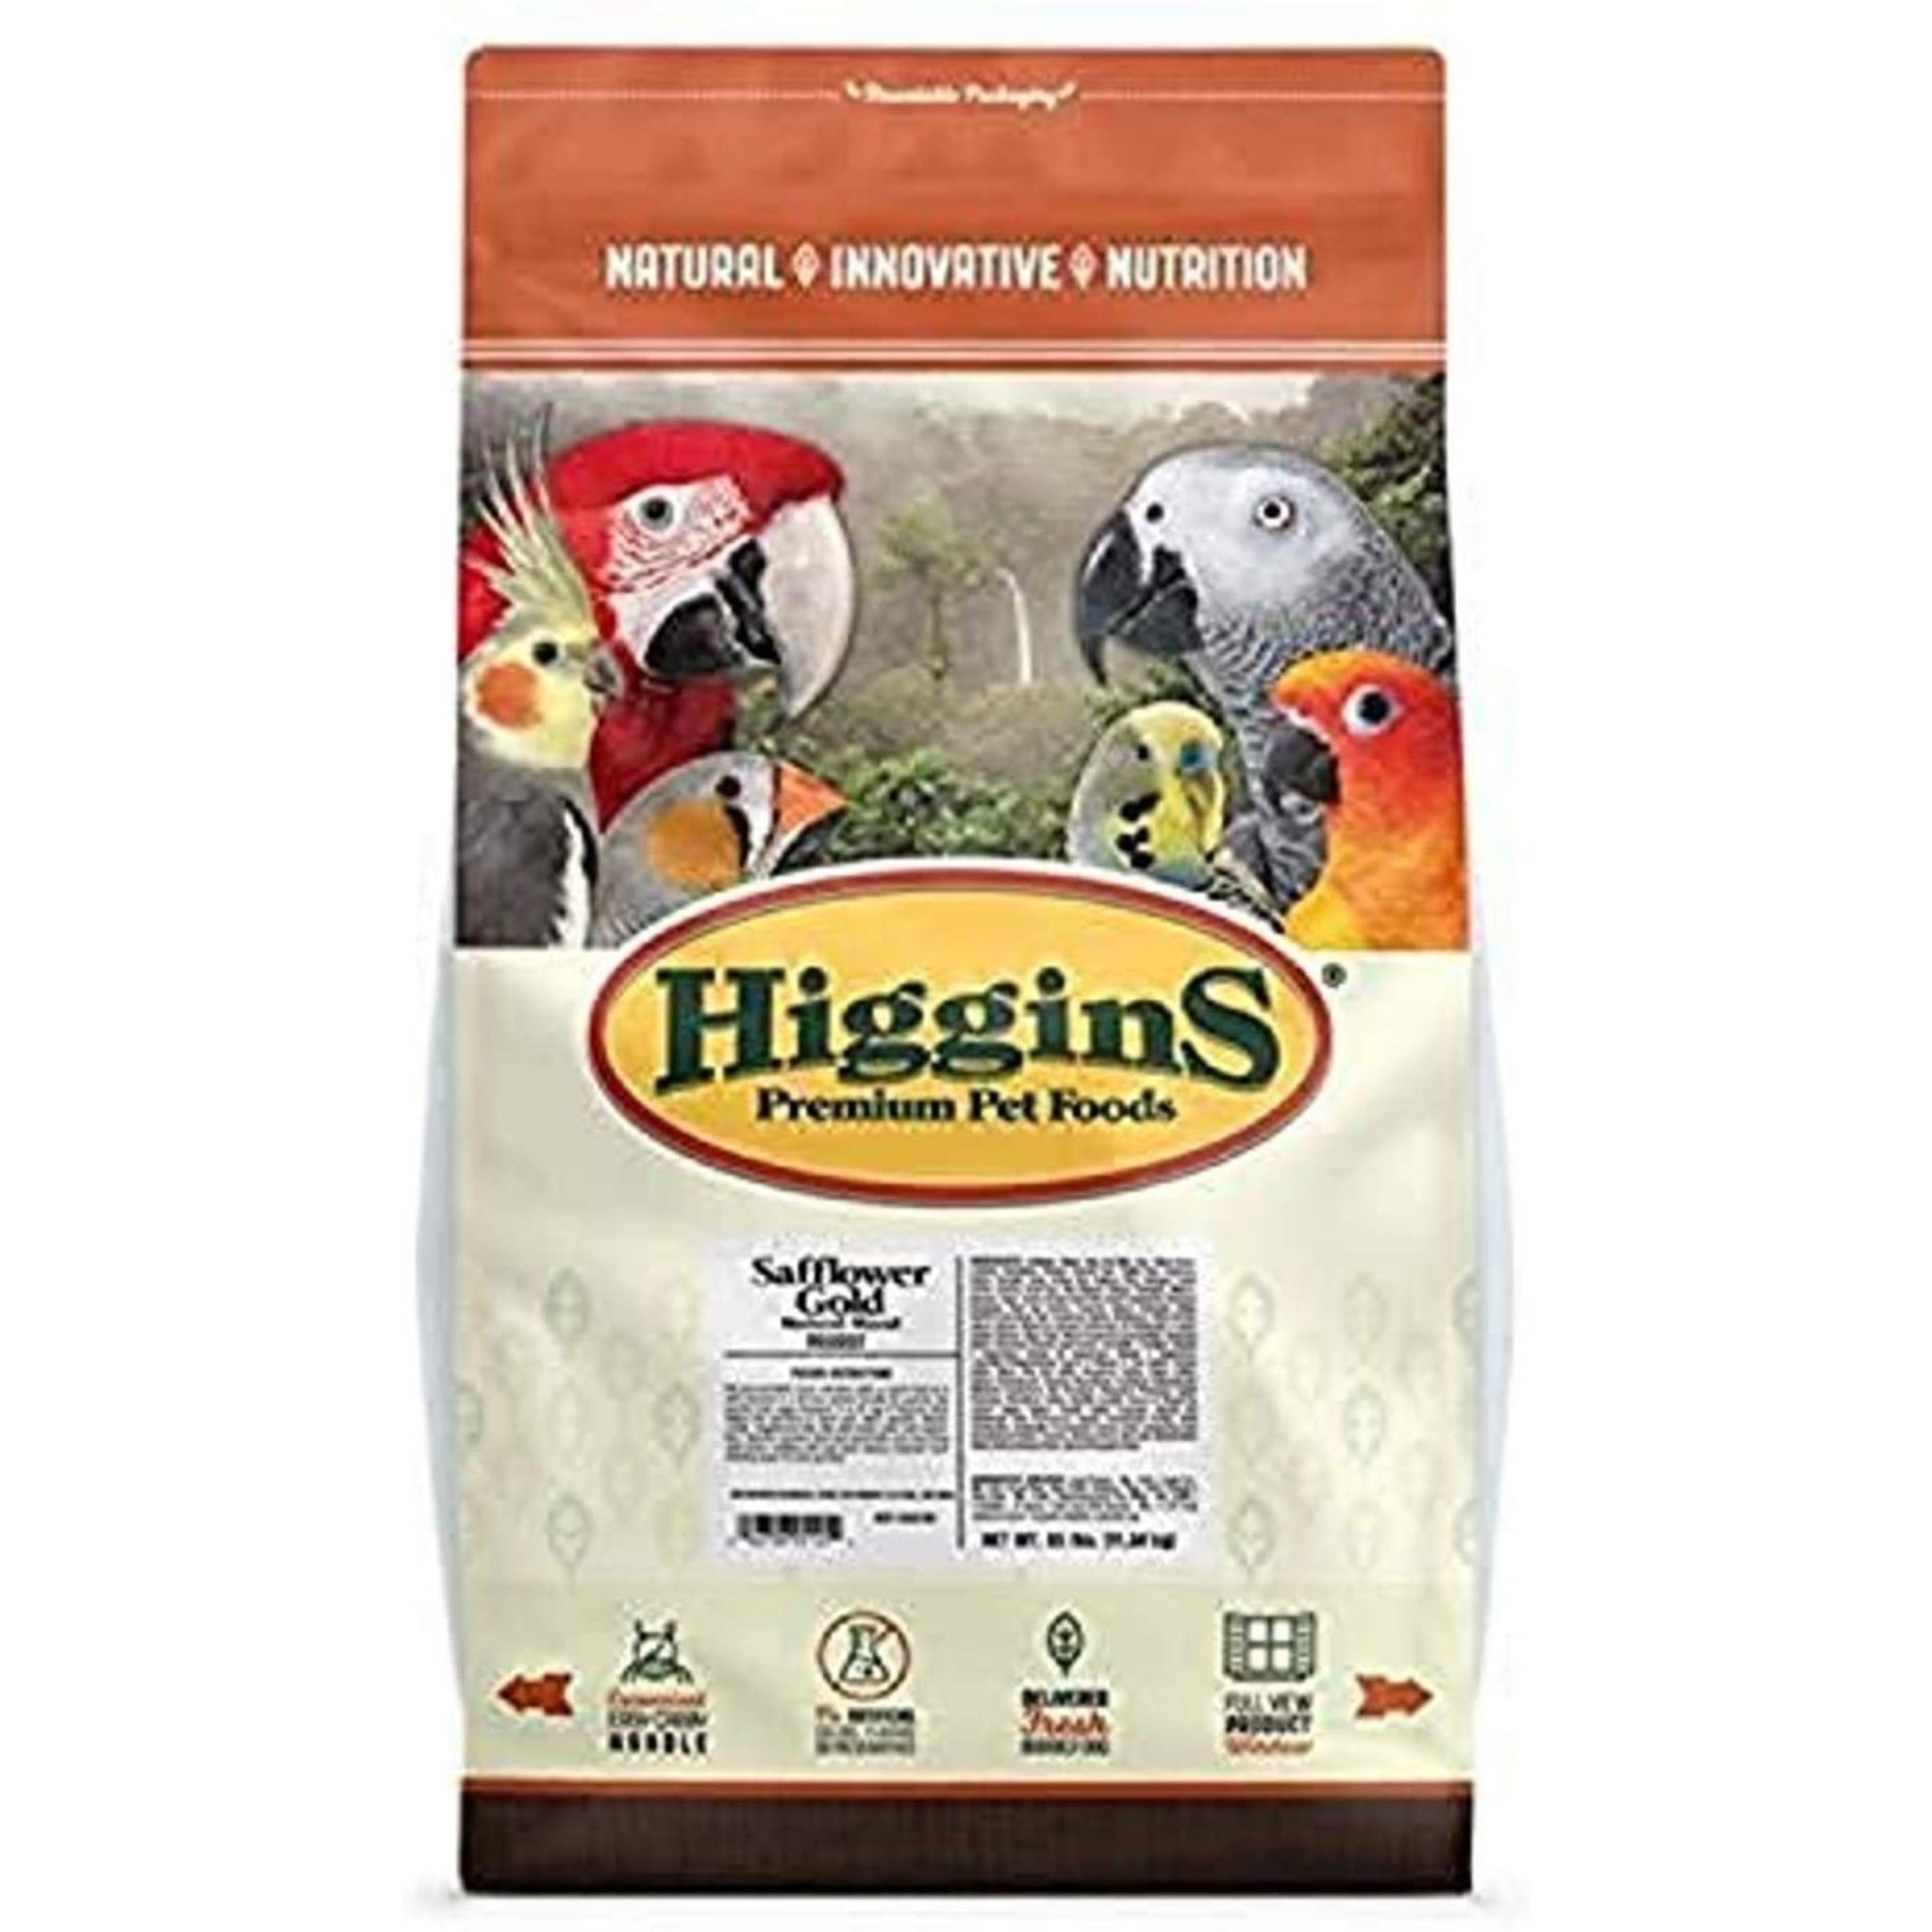 Higgins Premium Pet Food Safflower Gold Food for Parrots, 25 lb